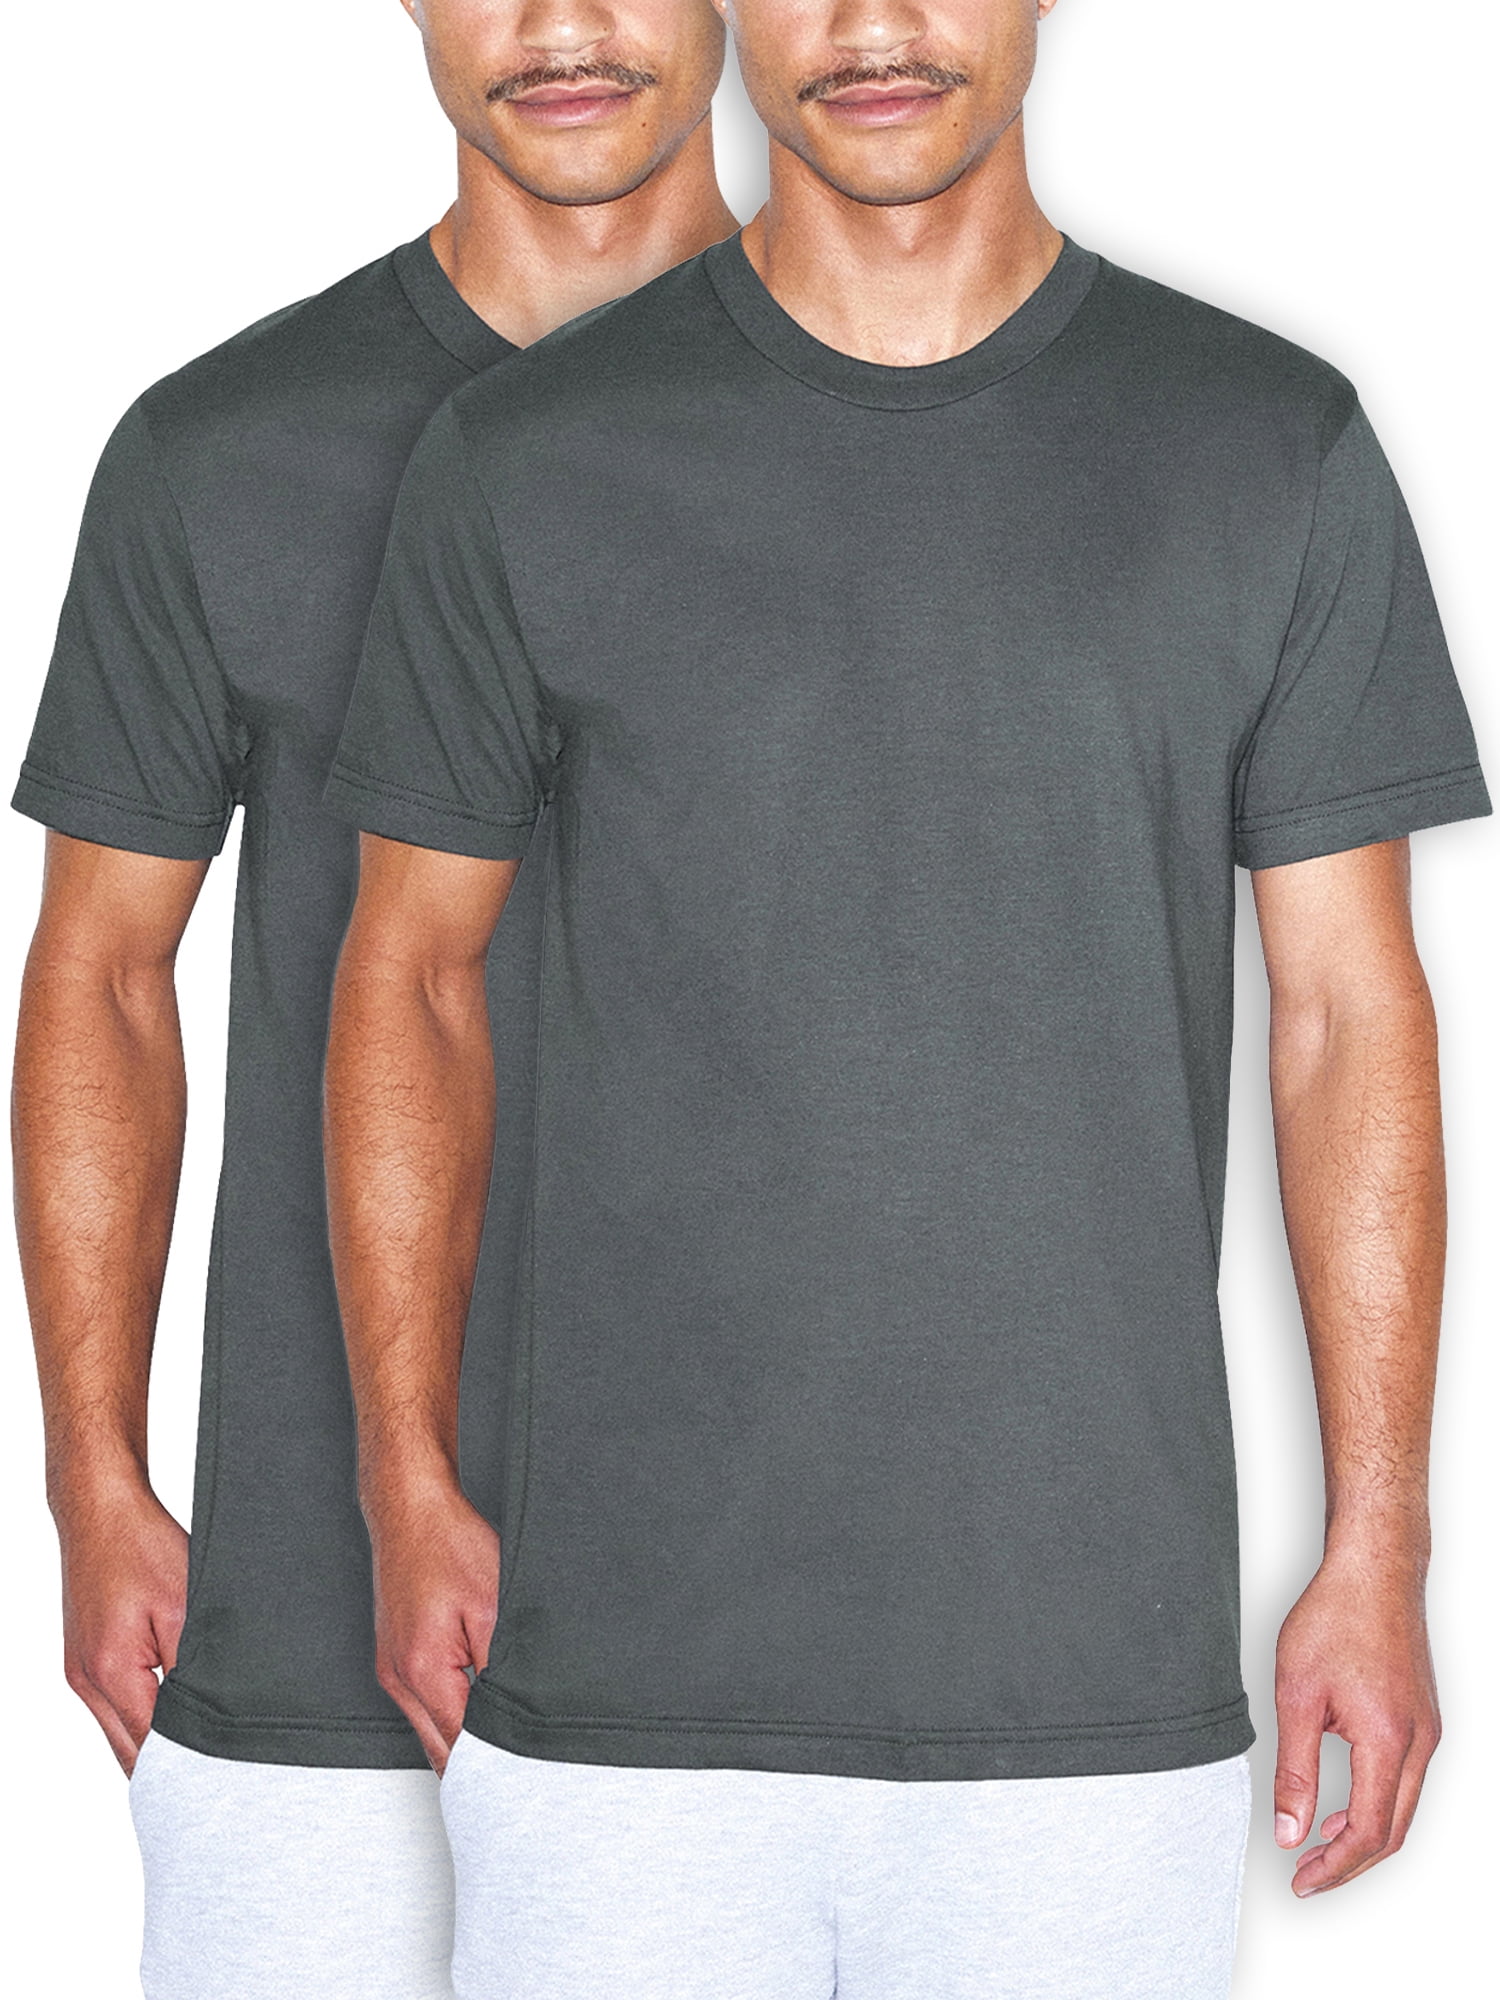 New Cotton American Apparel crew neck Men's Graphic T-shirt Top Short Sleeve Tee 